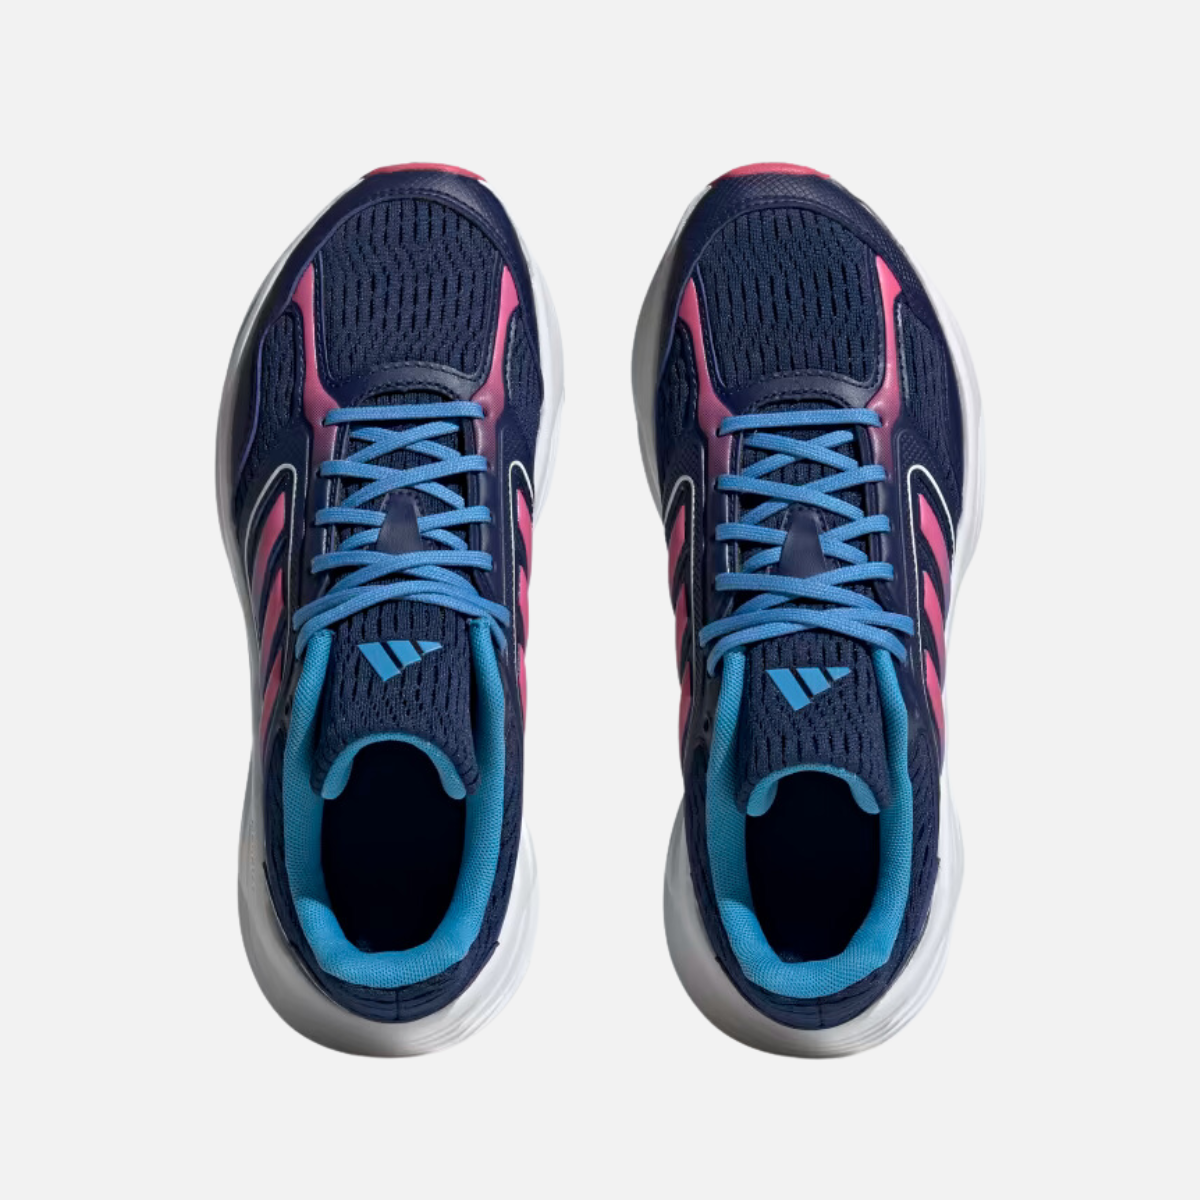 Adidas Galaxy Star Women's Running Shoes -Dark Blue/Semi Solar Pink/Pulse Blue